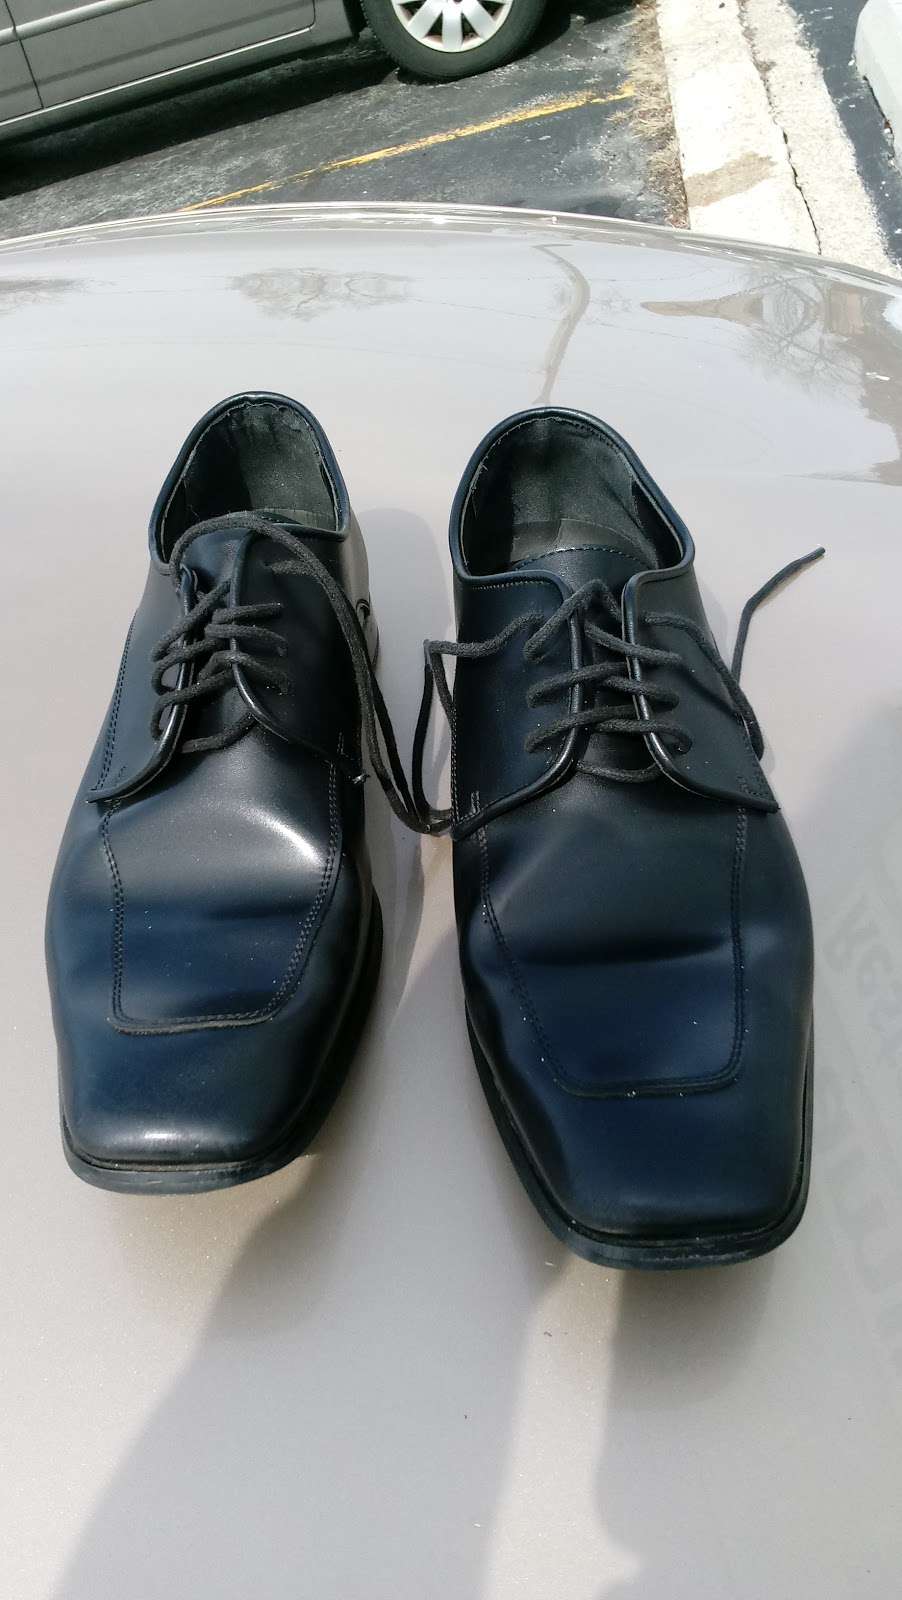 Black Tie Formalwear | 544 E 162nd St, South Holland, IL 60473, USA | Phone: (708) 596-6330